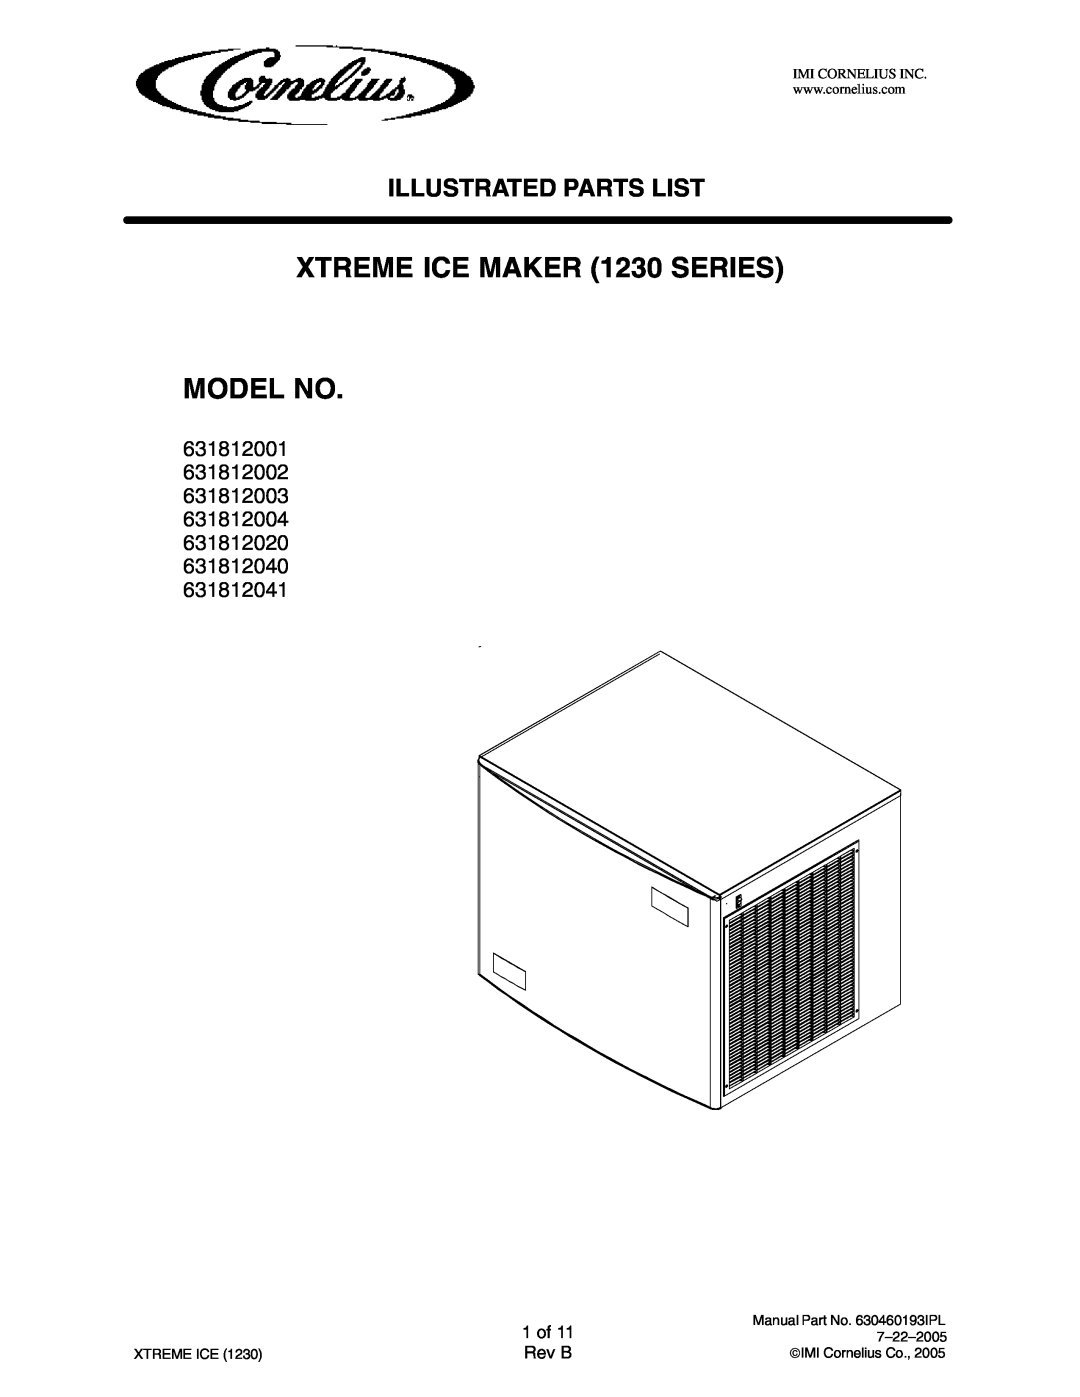 Cornelius 631812020 manual XTREME ICE MAKER 1230 SERIES MODEL NO, Illustrated Parts List, 1 of, Rev B, 631812001 